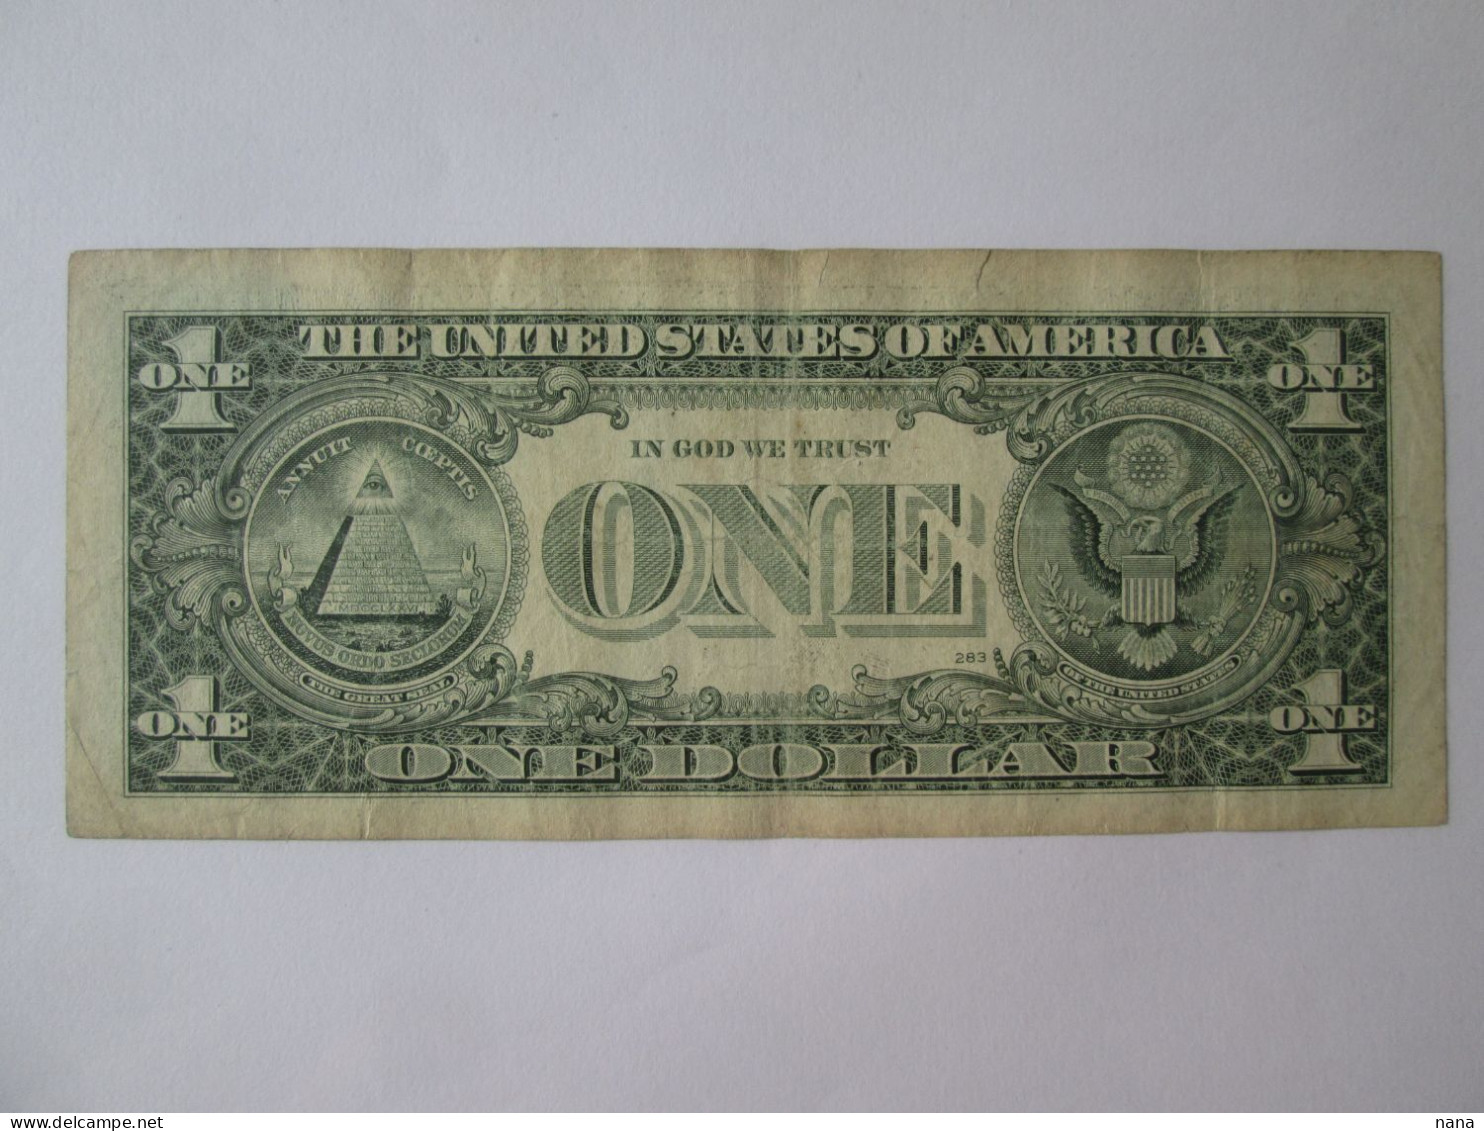 USA 1 Dollar 2009 Banknote See Pictures - Divisa Nacional